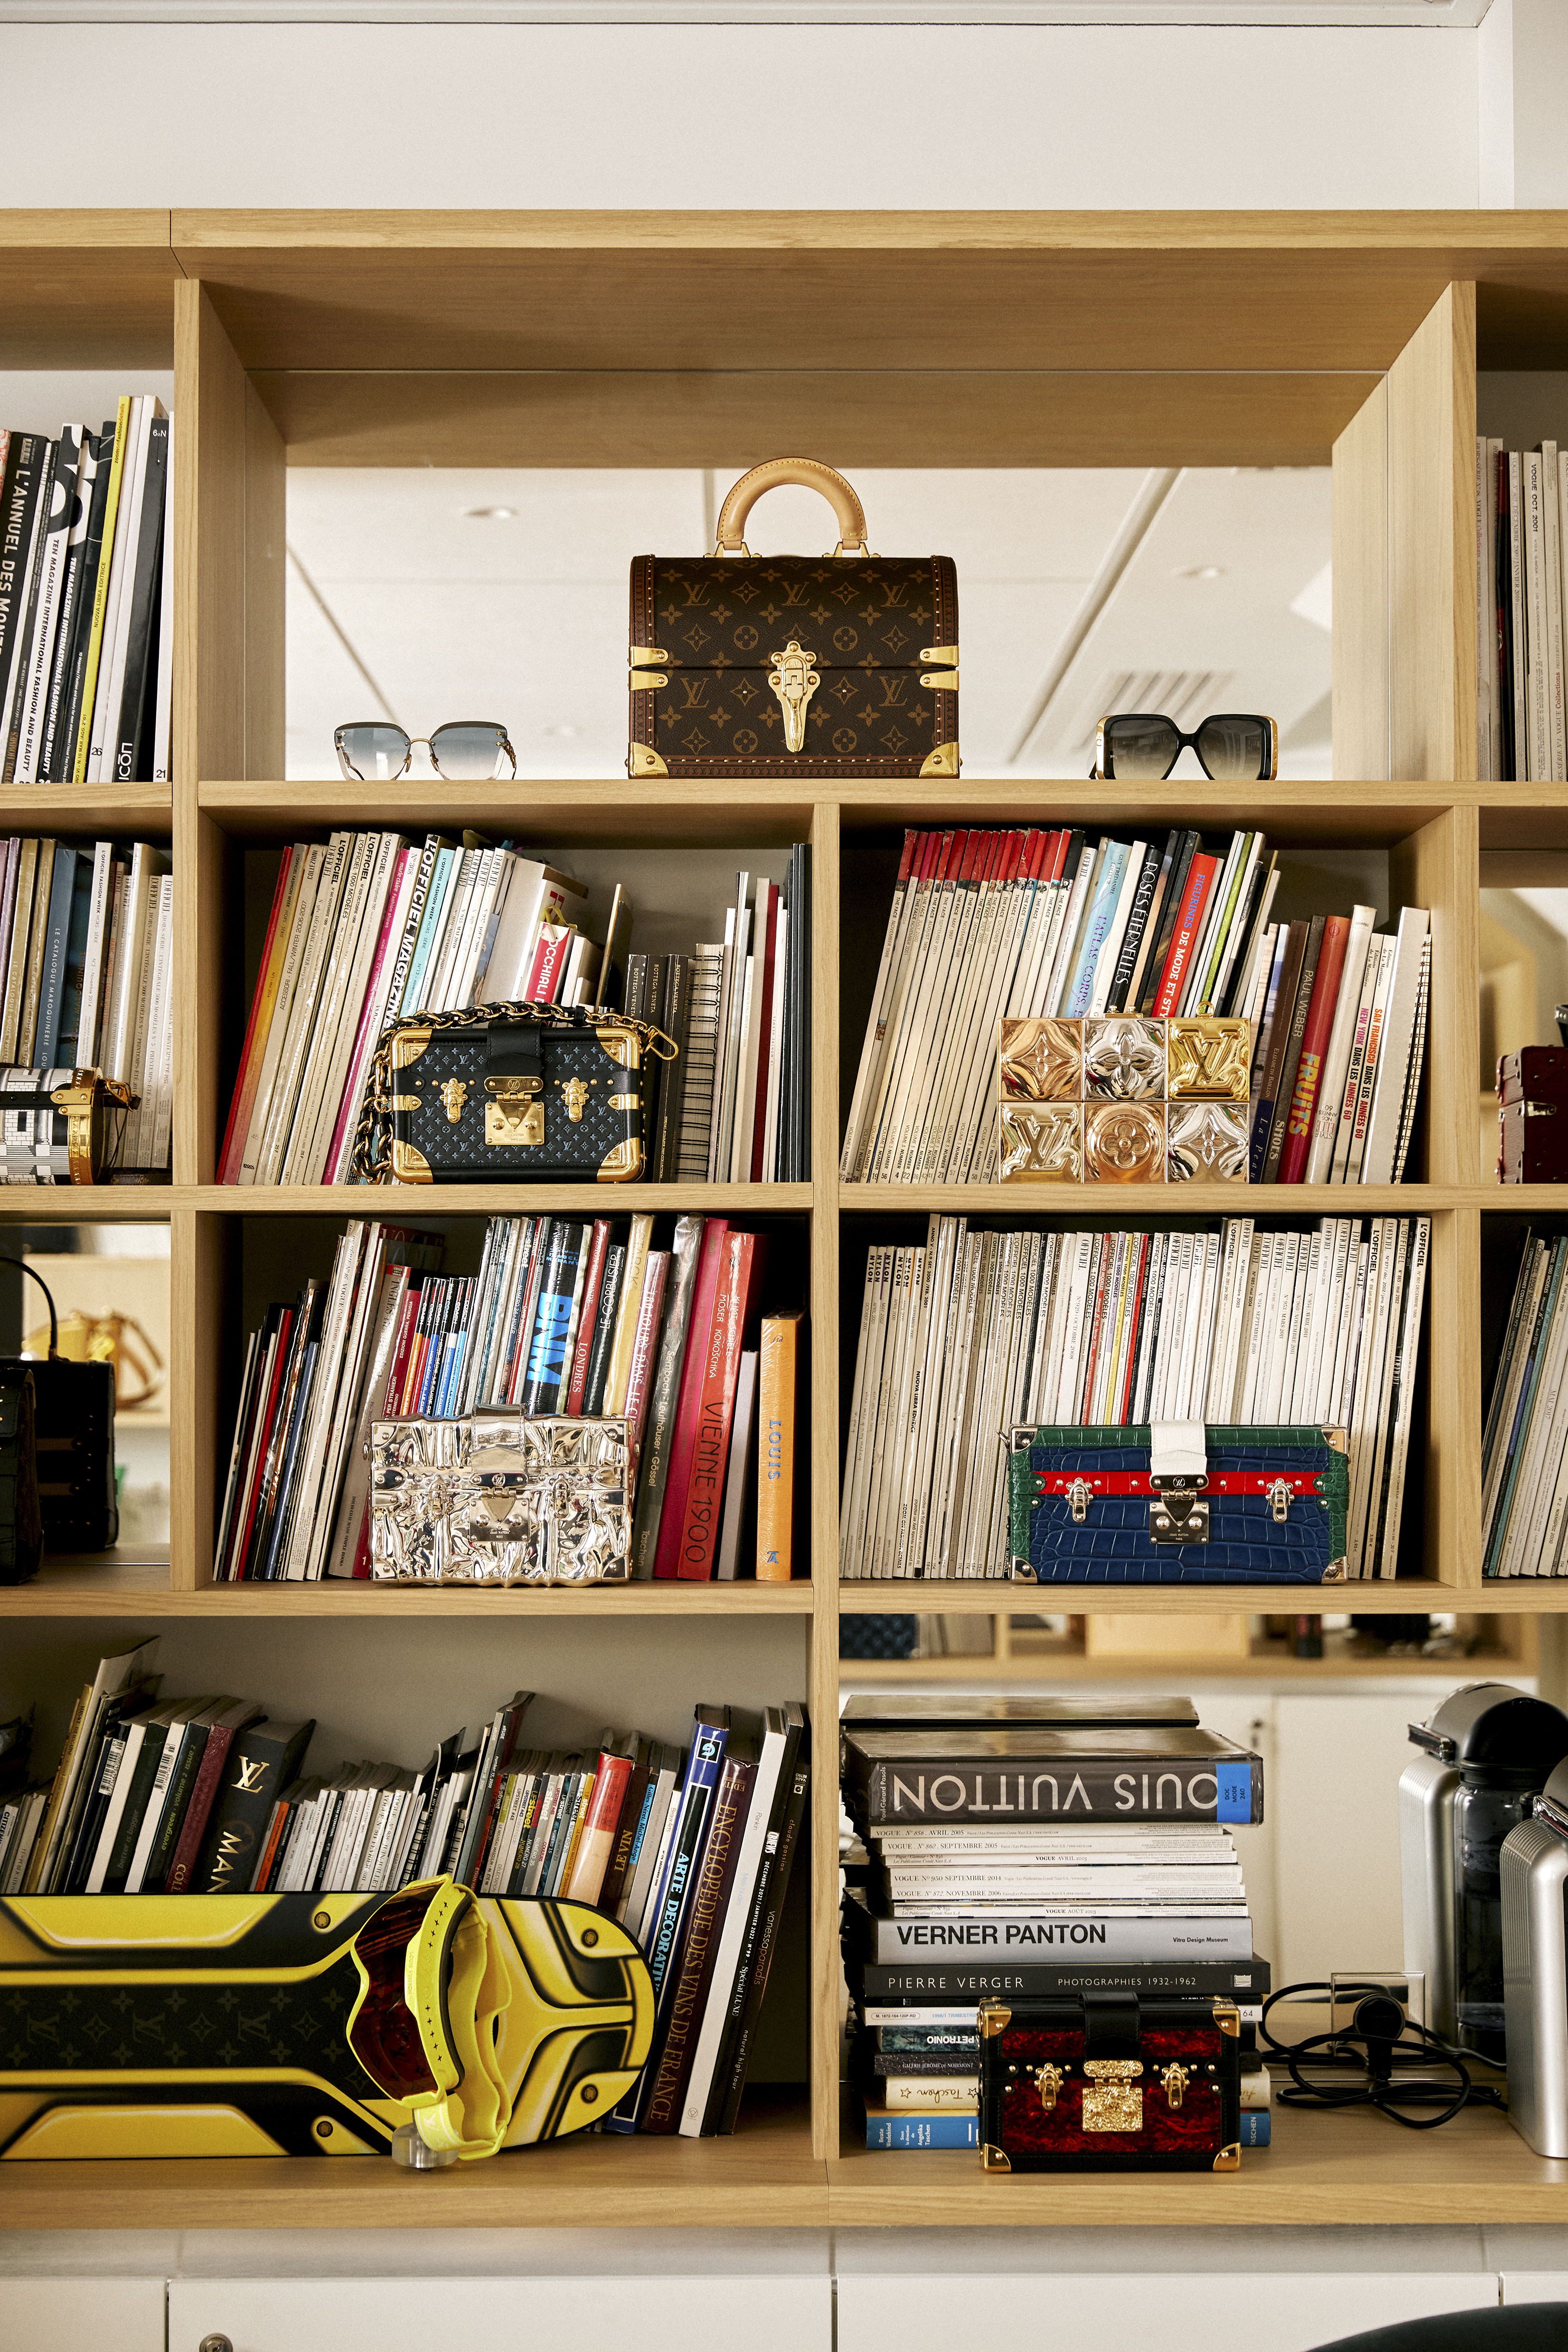 Louis Vuitton lanza una colección cápsula sobre Puerto Banús